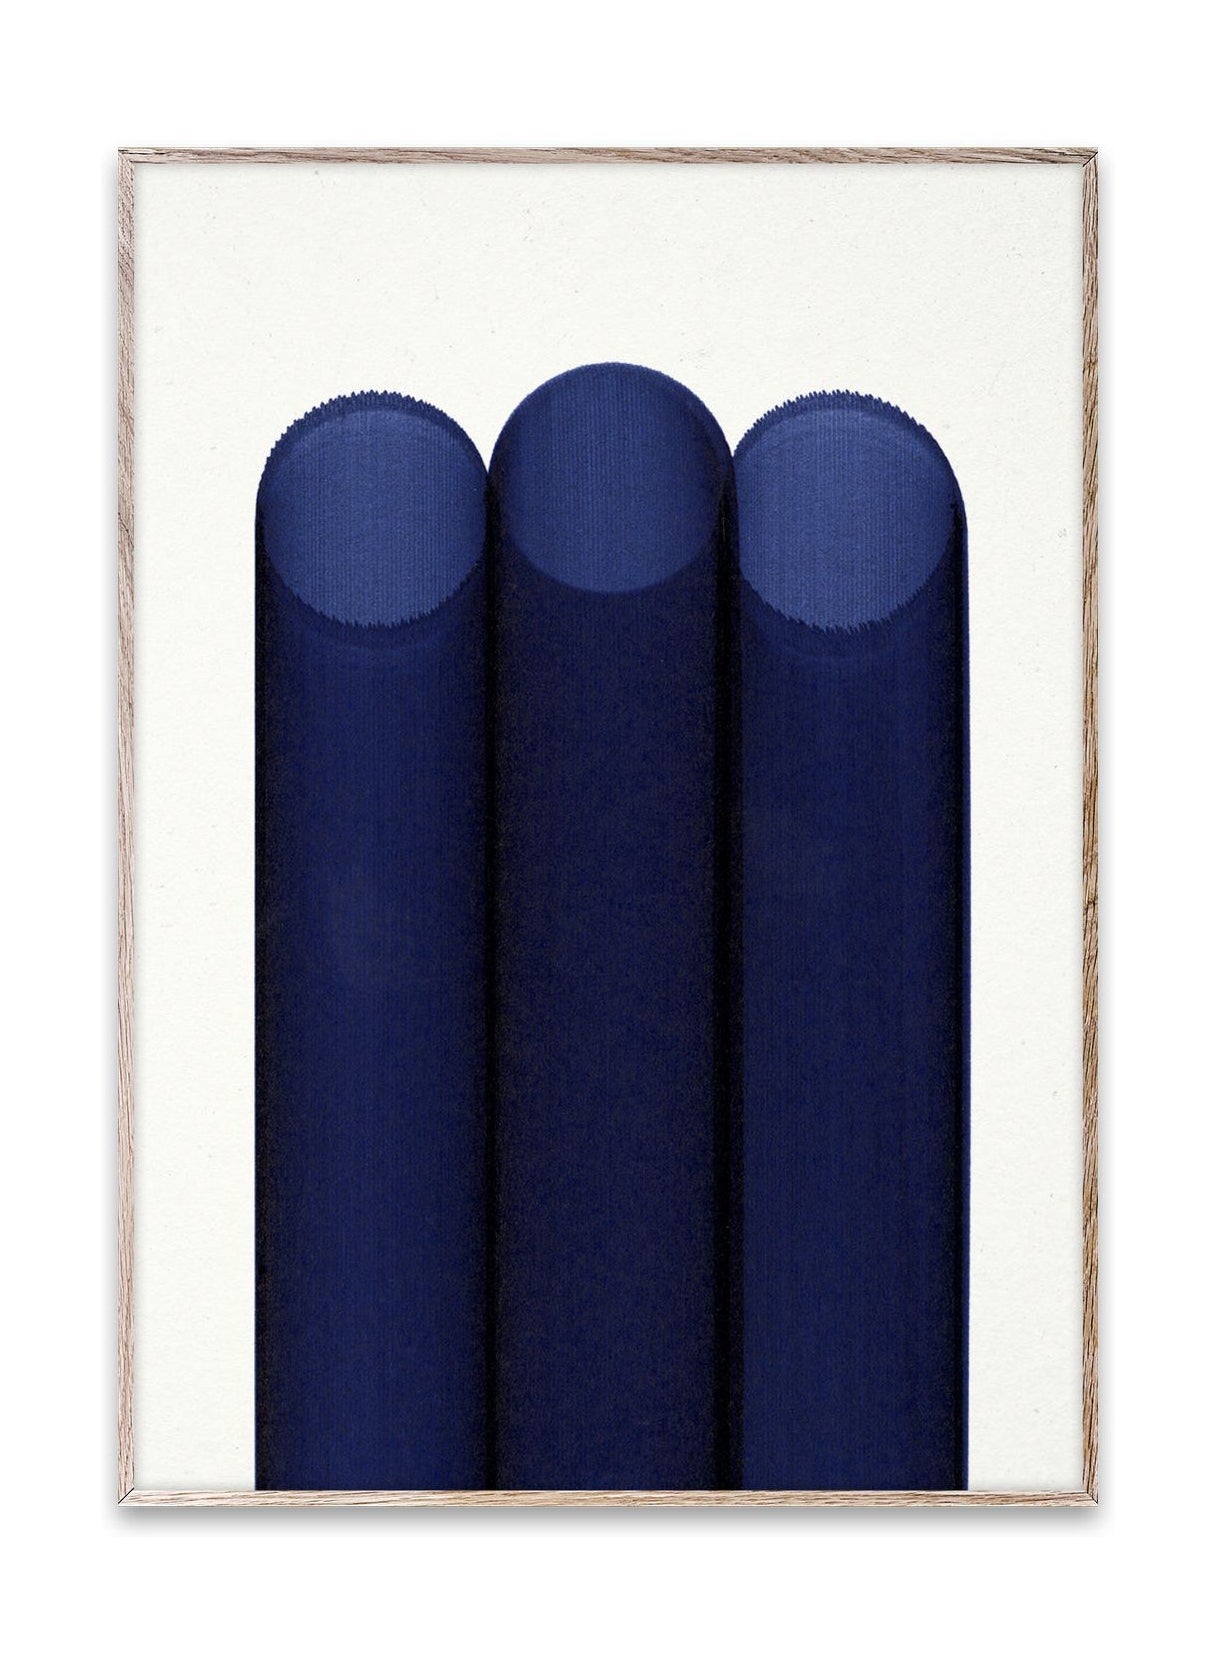 Papierkollektivblau -Rohrposter, 30 x 40 cm